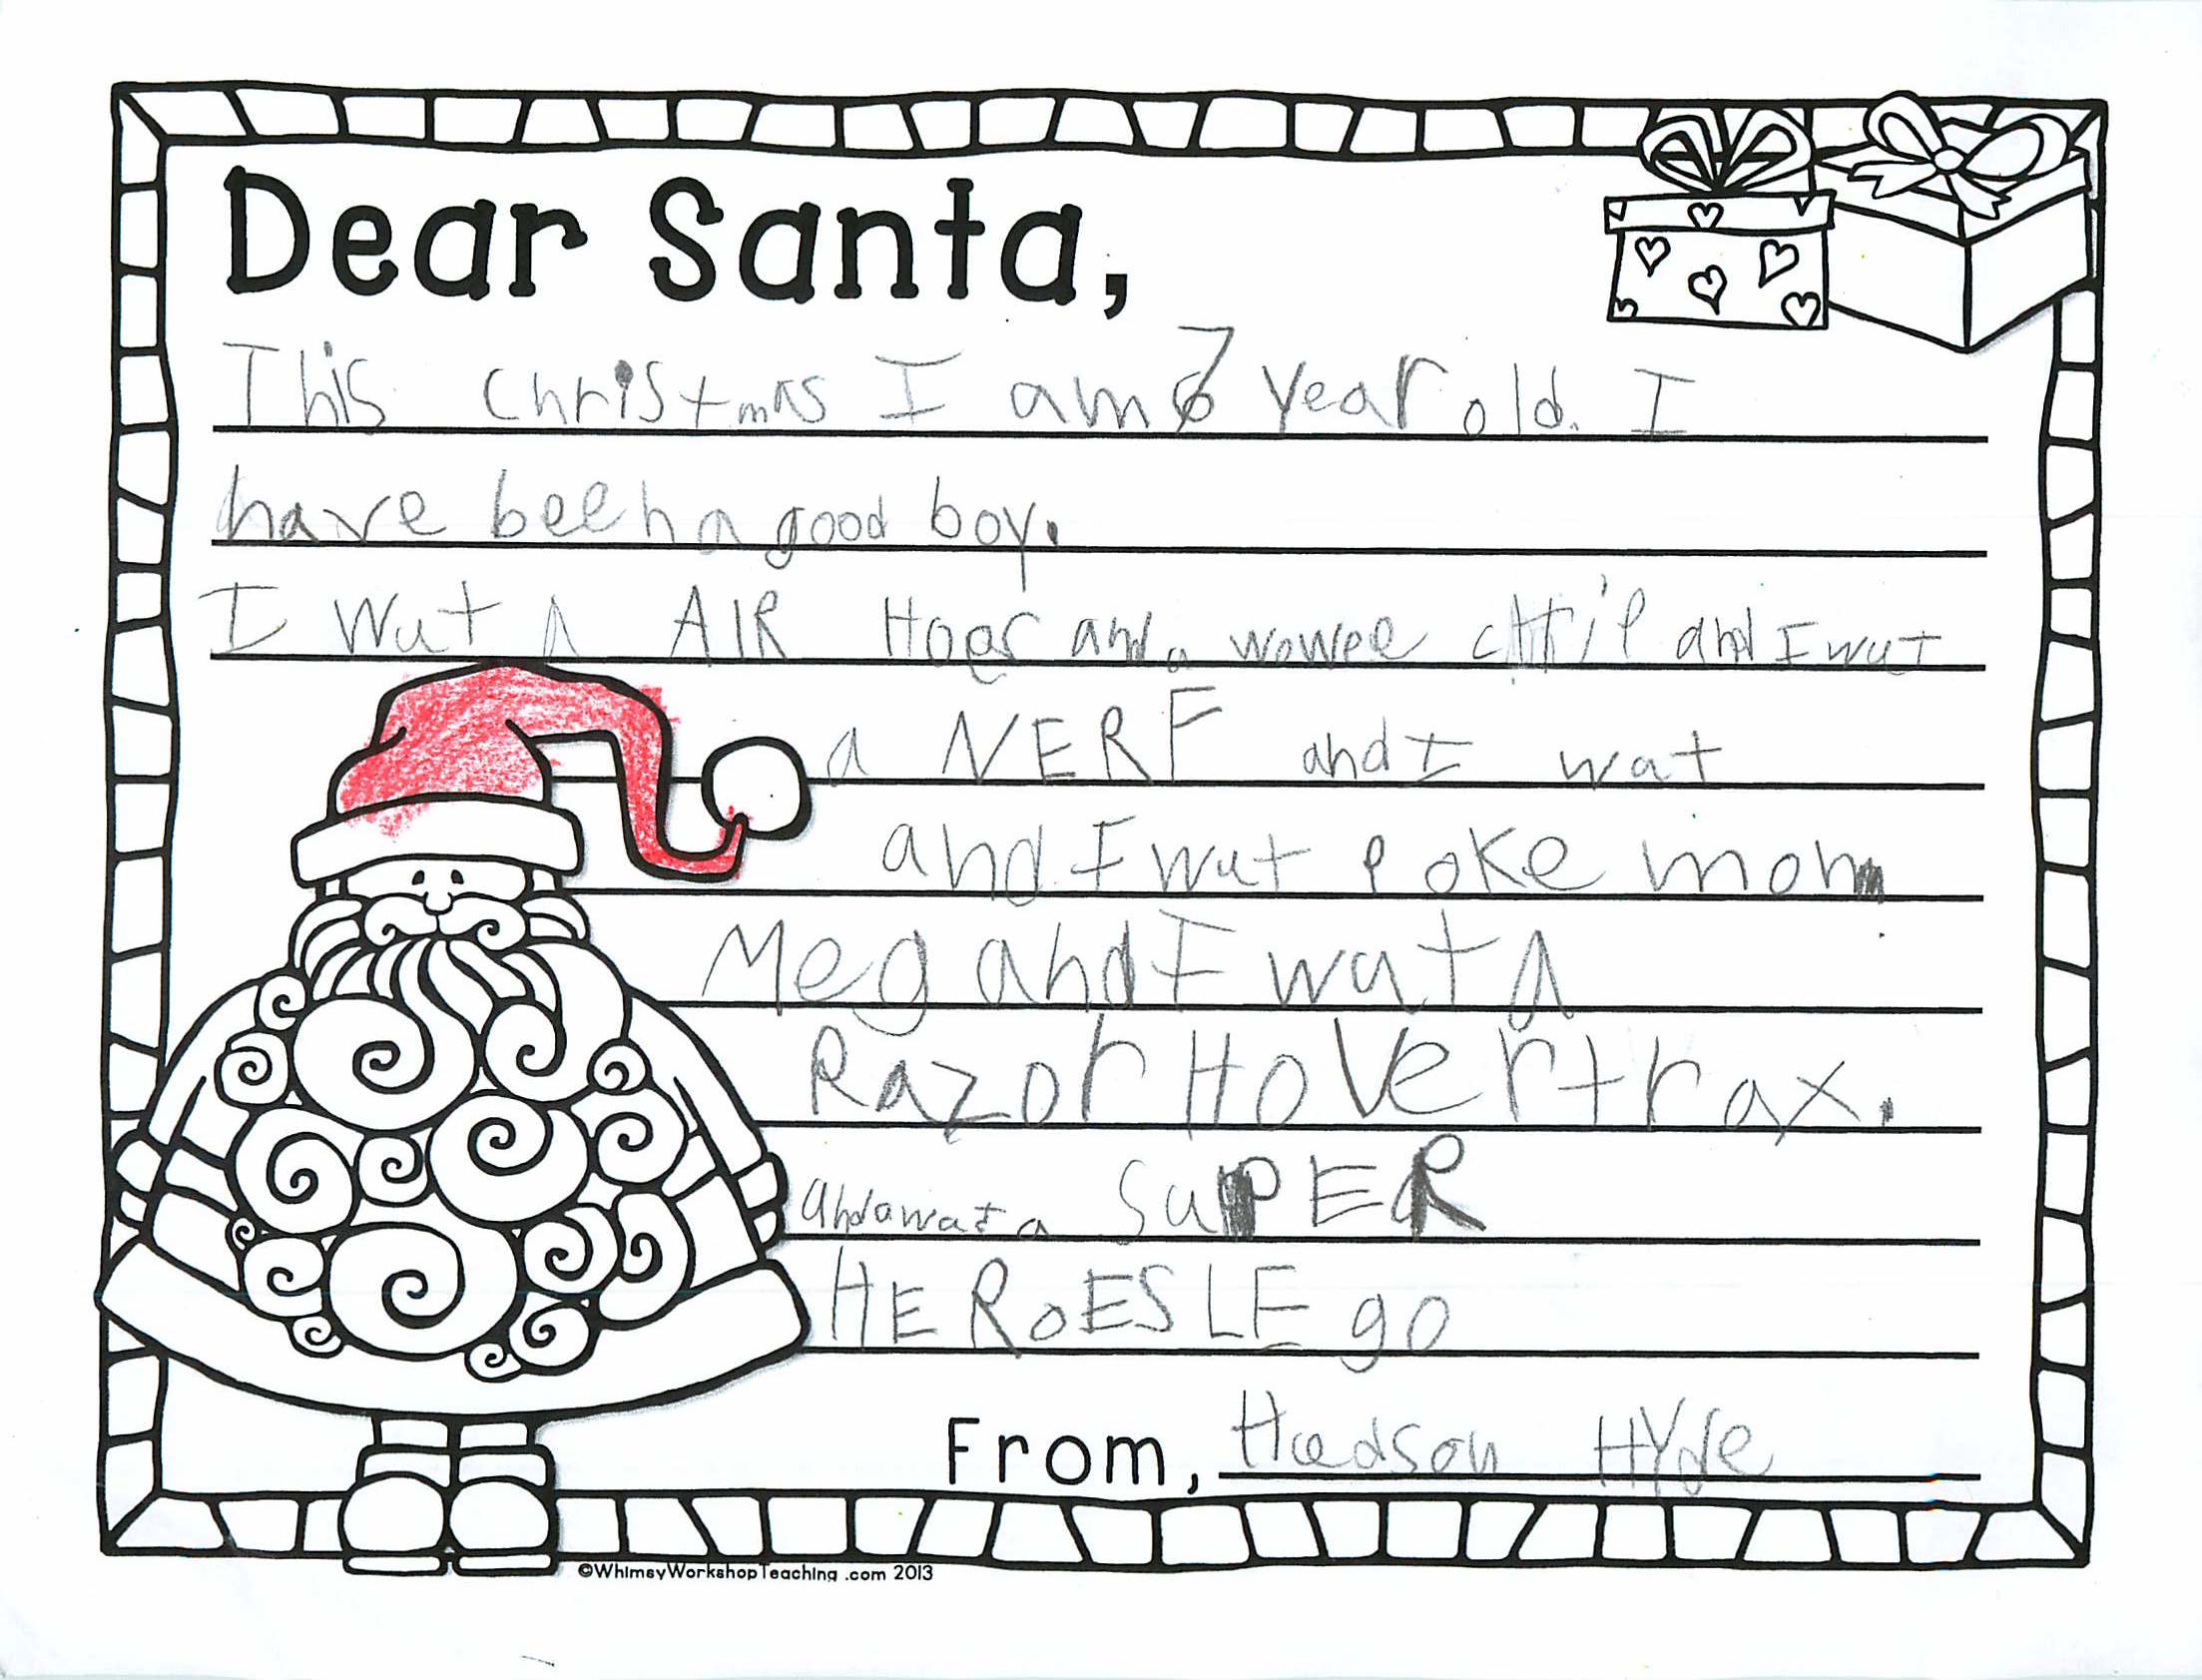 Dear Santa: Santa letters published for 2016, News